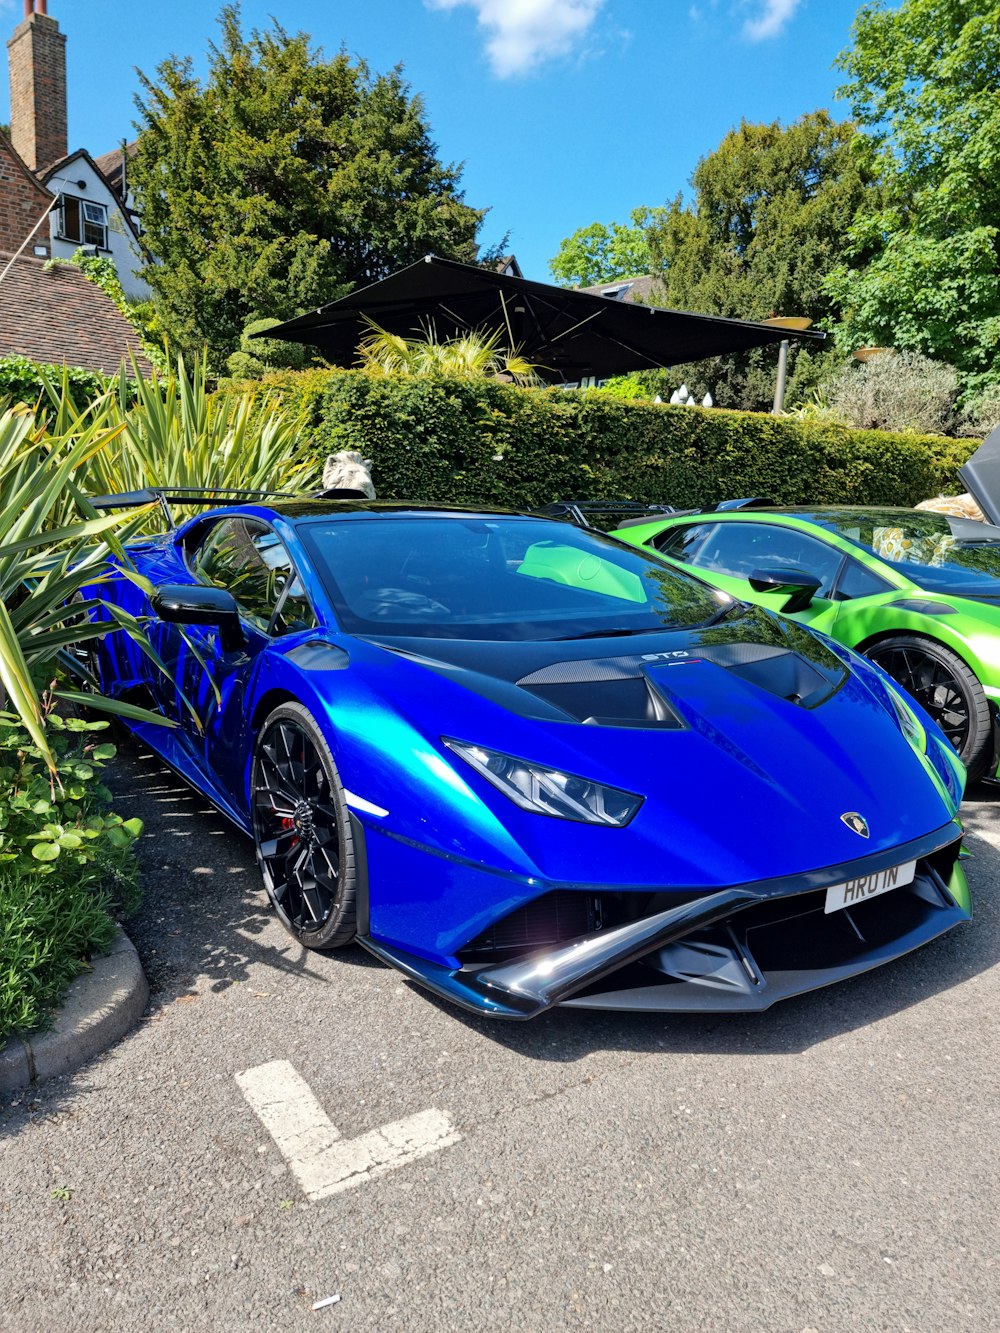 a blue sports car parked next to a green car